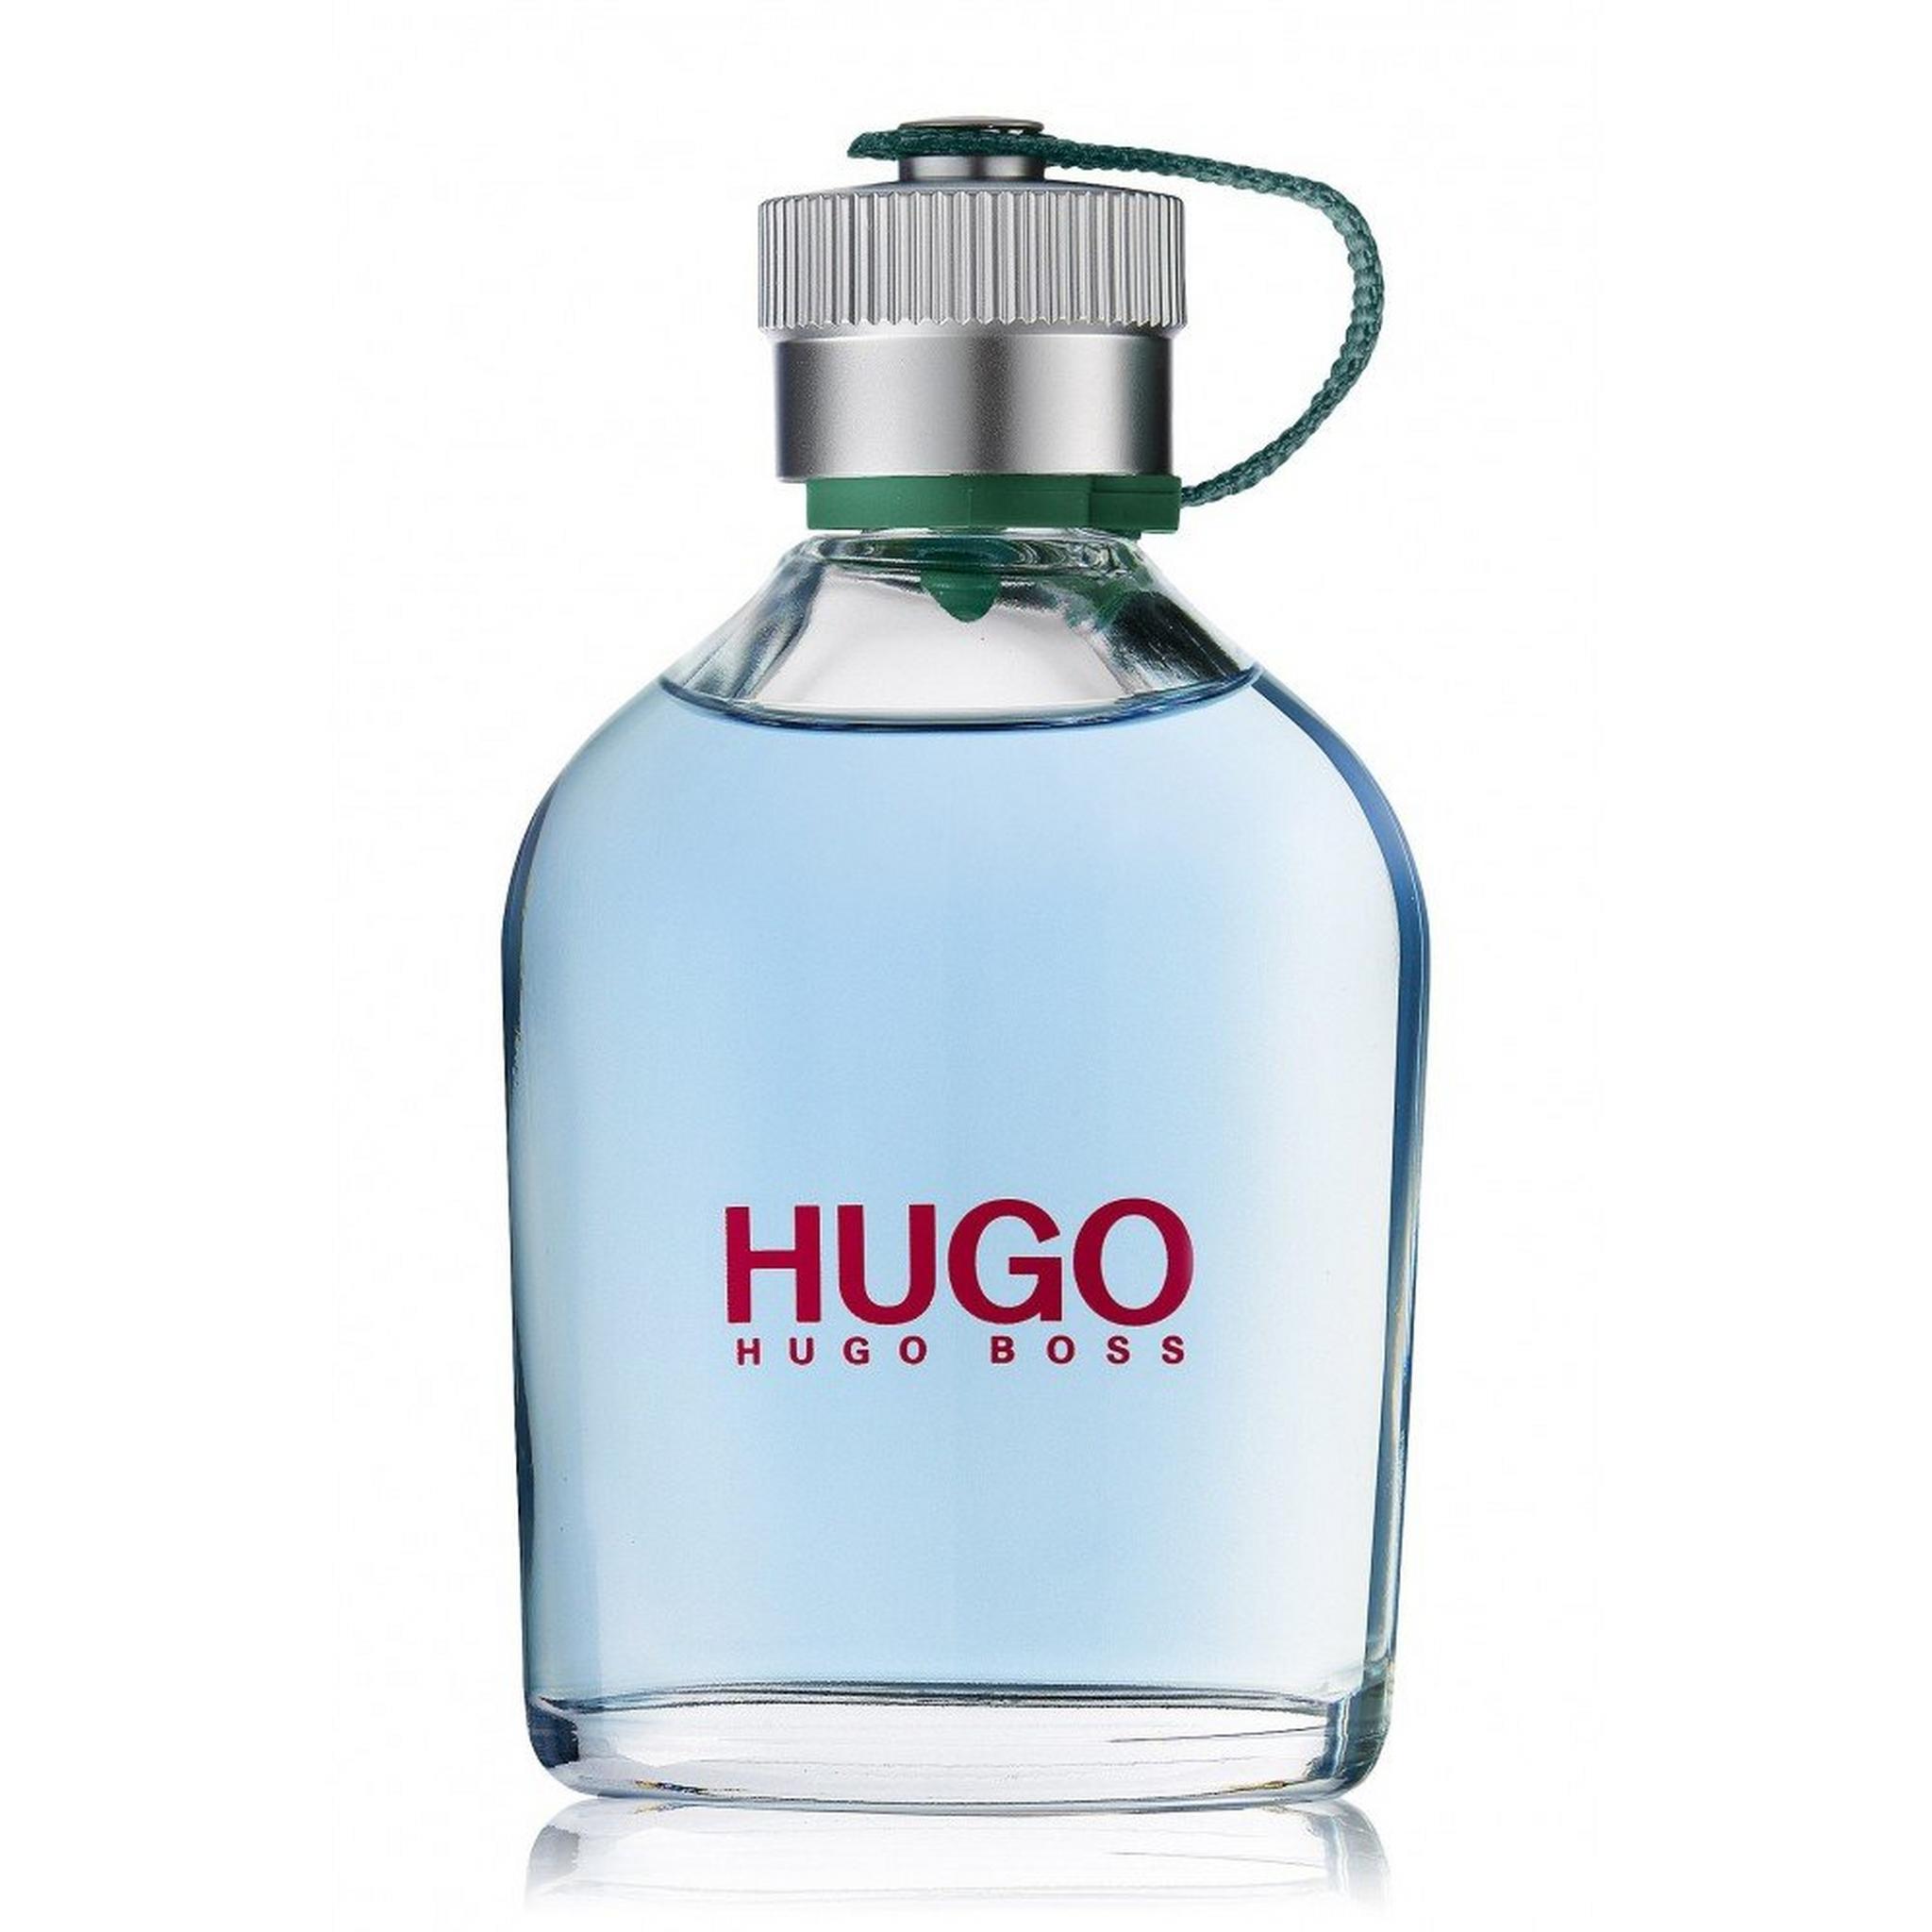 Hugo Boss Classic by Hugo Boss for Men 125 mL Eau de toilette